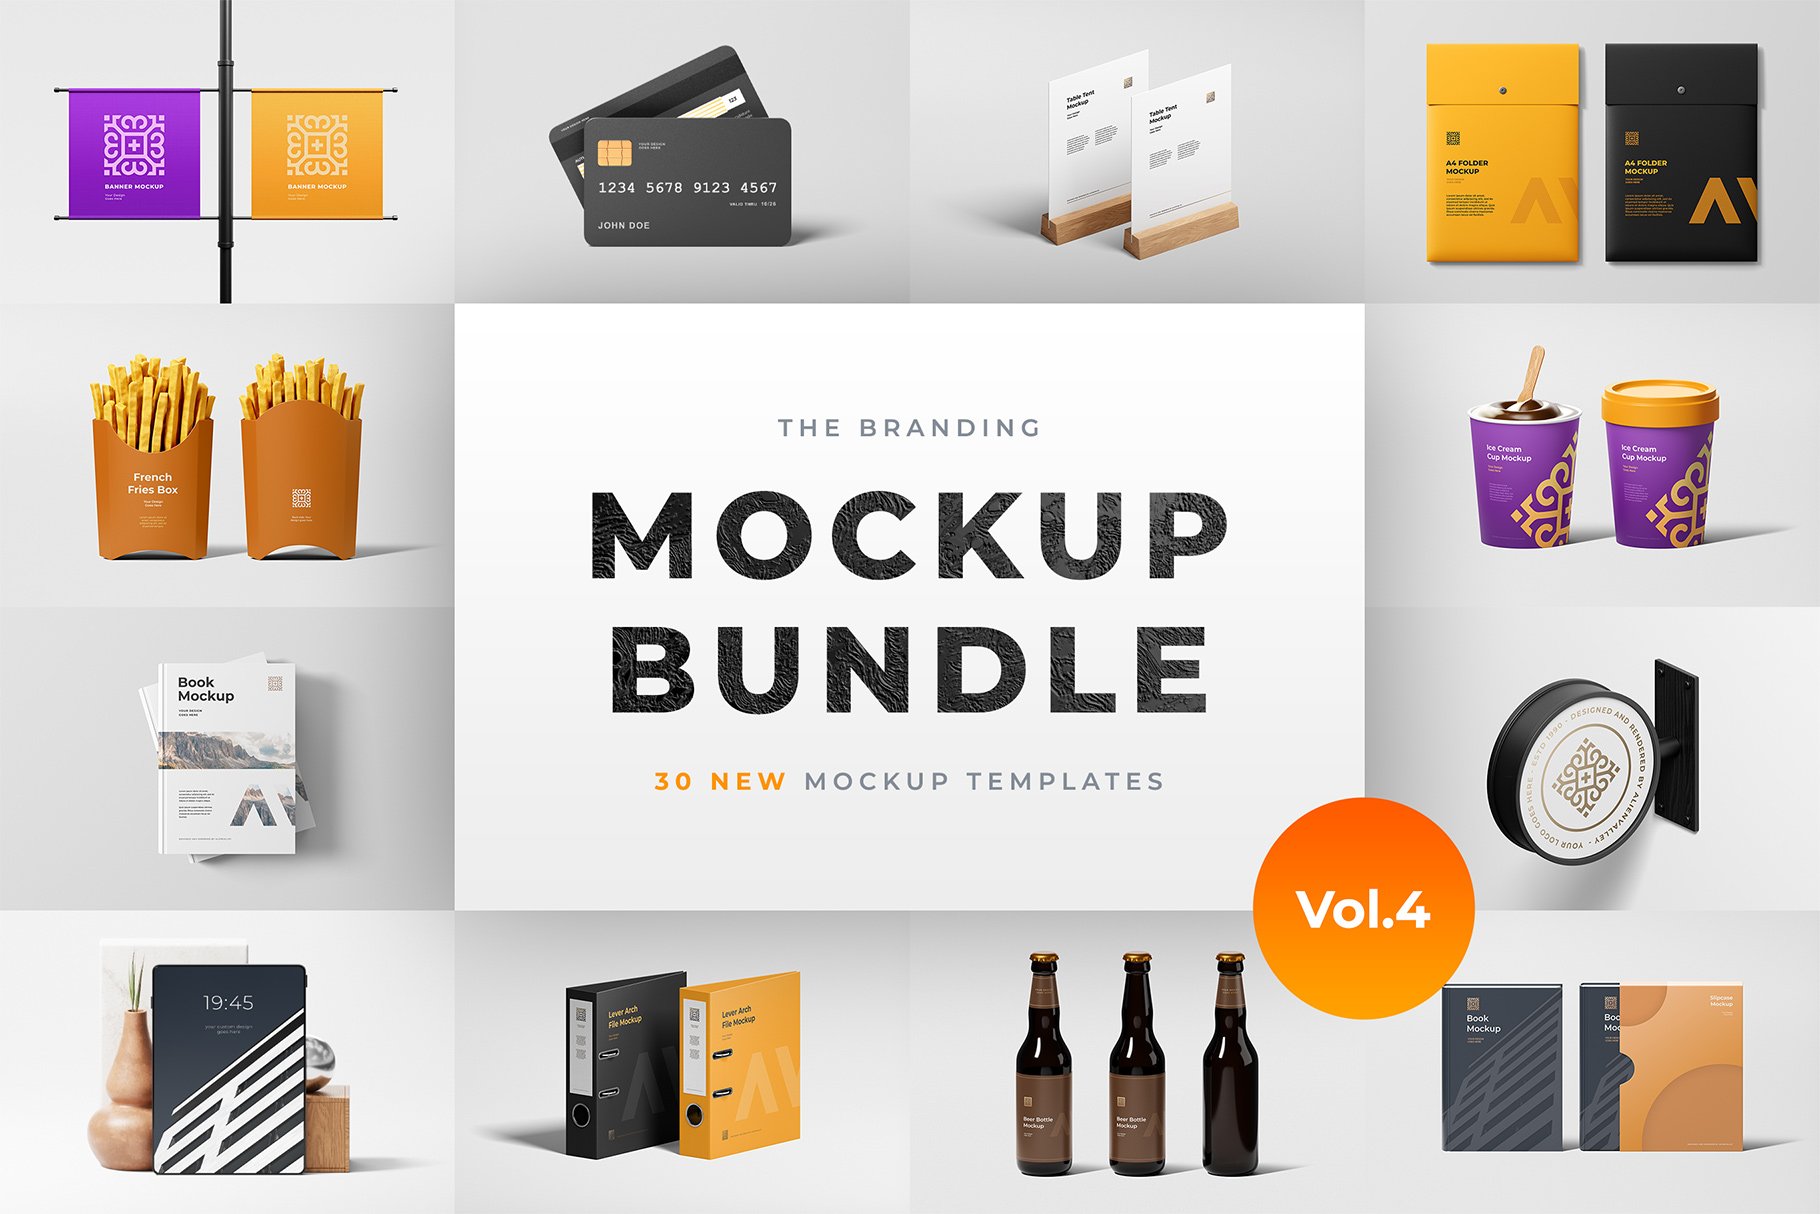 The Branding Mockup Bundle Vol.4 cover image.